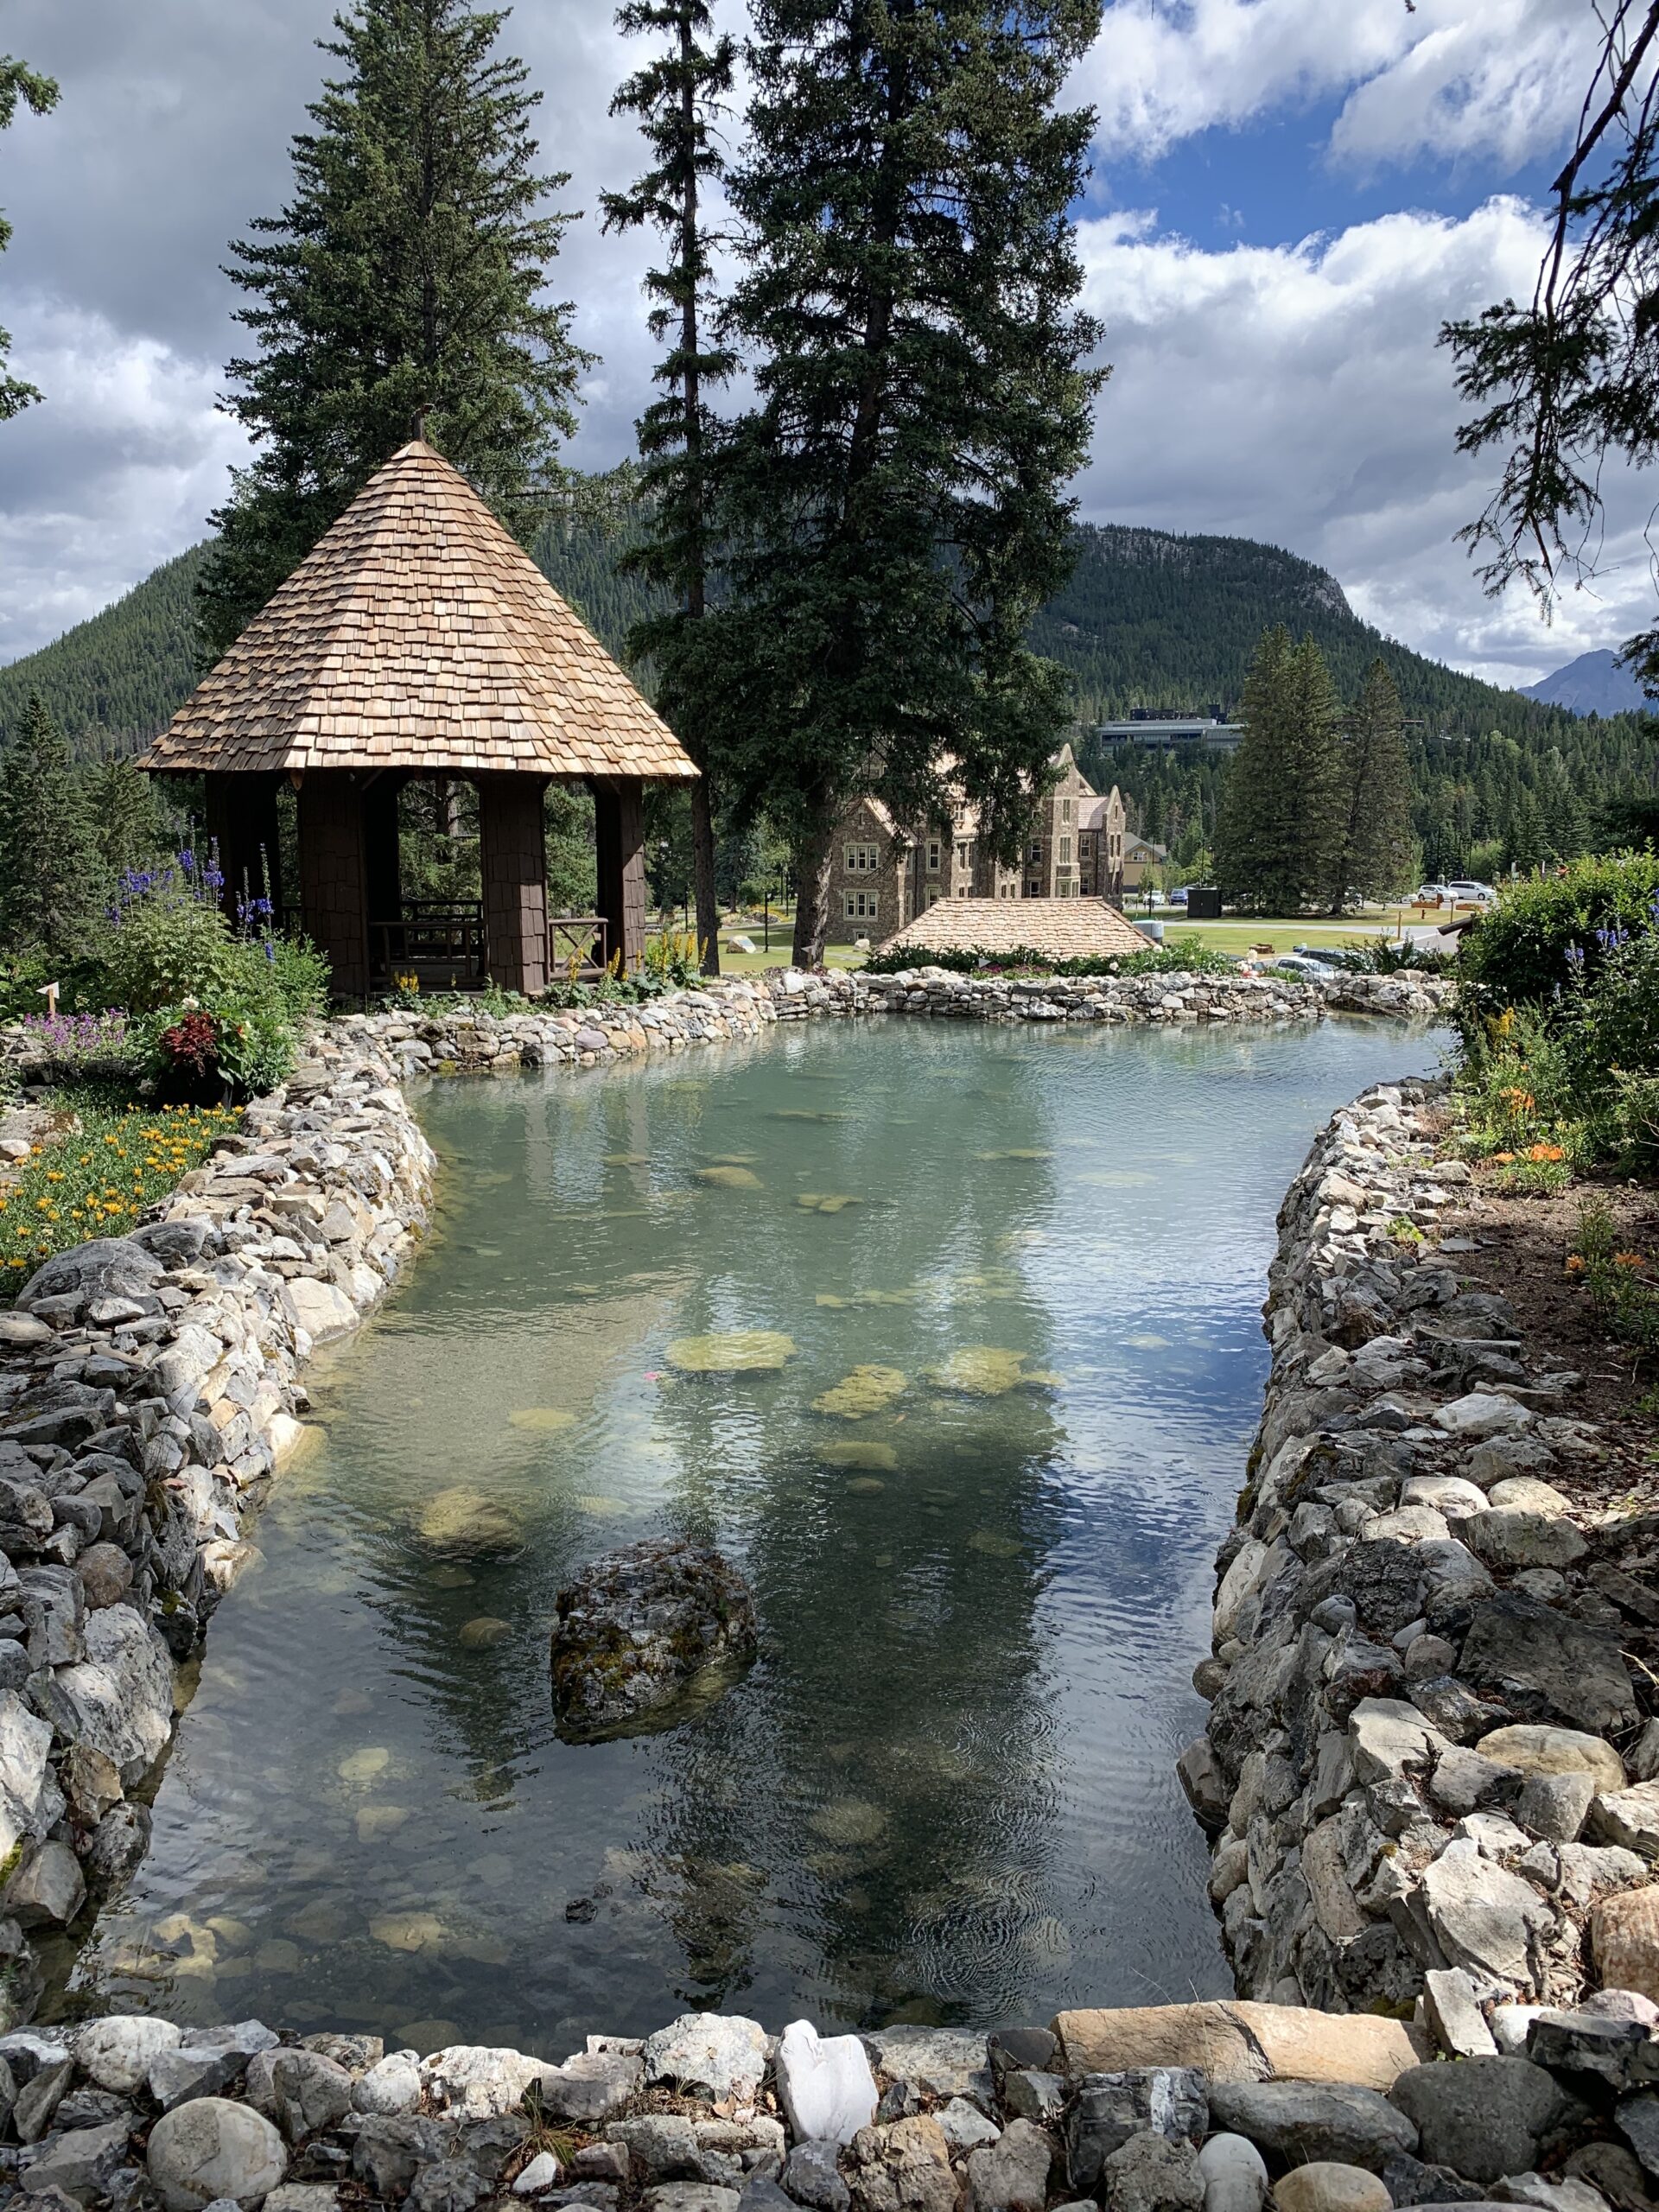 The Pond In Cascade Gardens